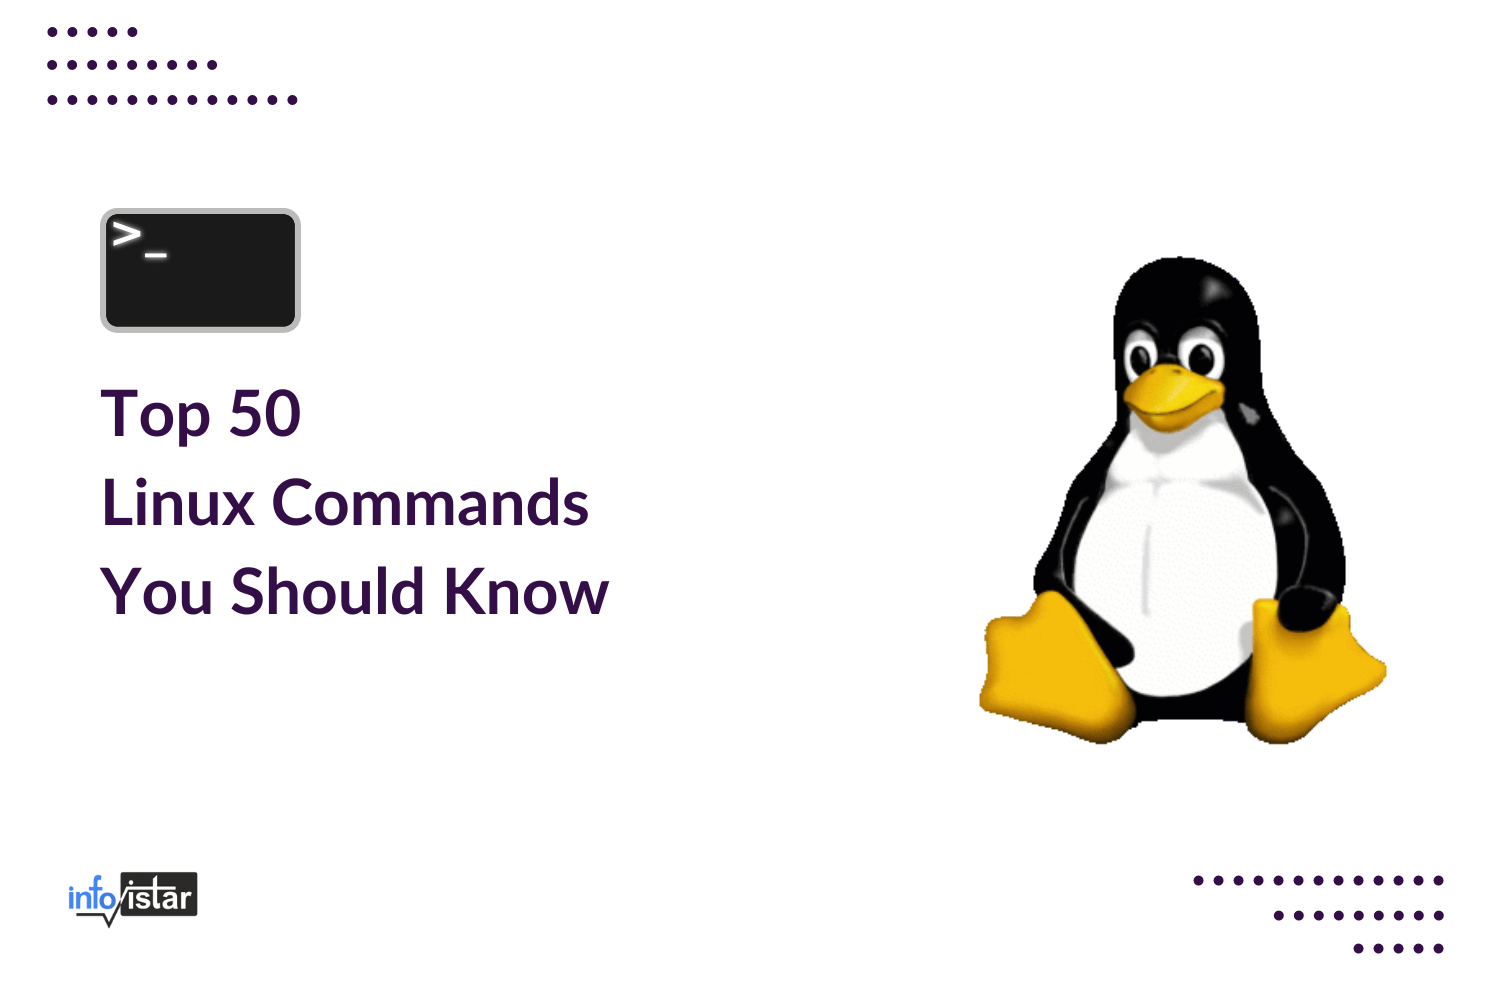 op 50 Linux Commands You Should Know